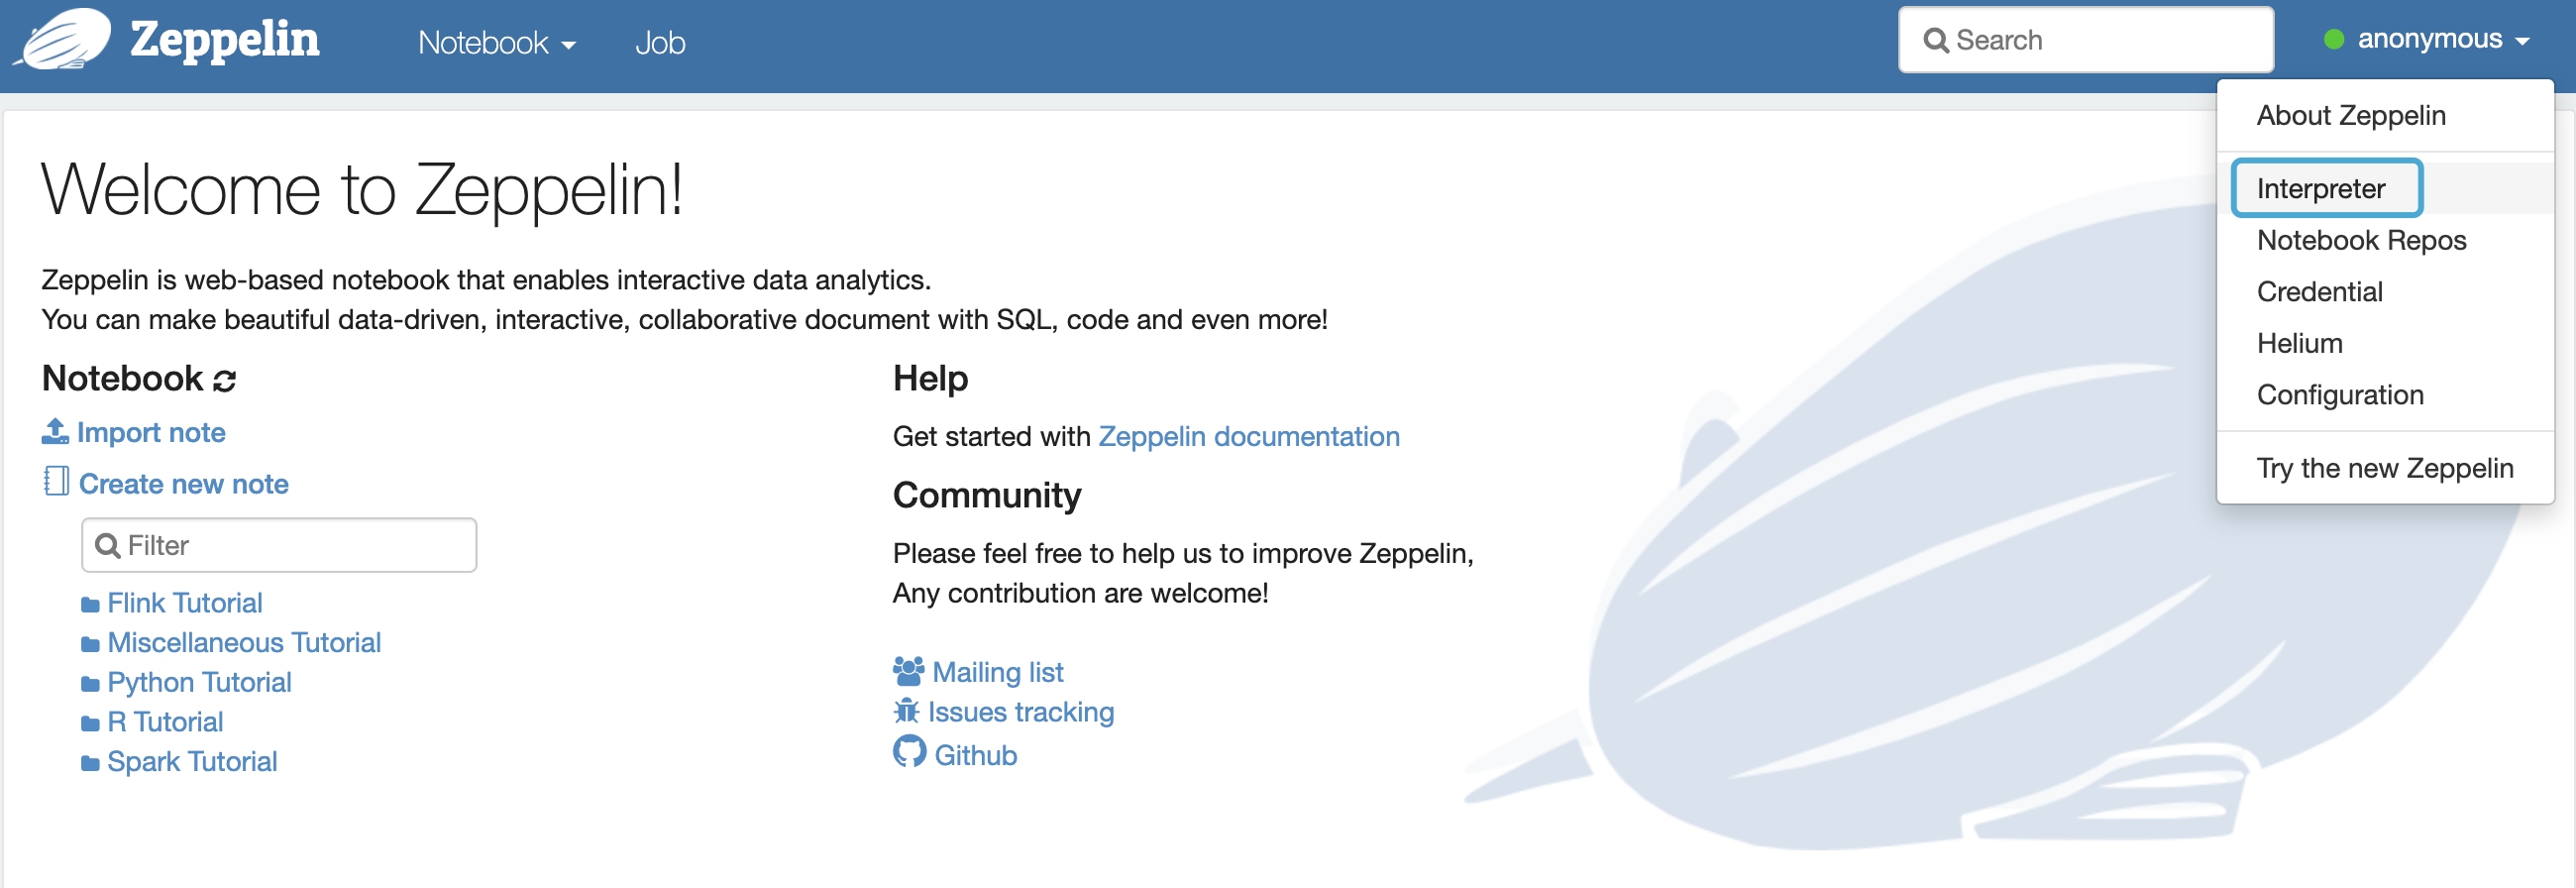 Flink SQL 1.11 on Zeppelinָ